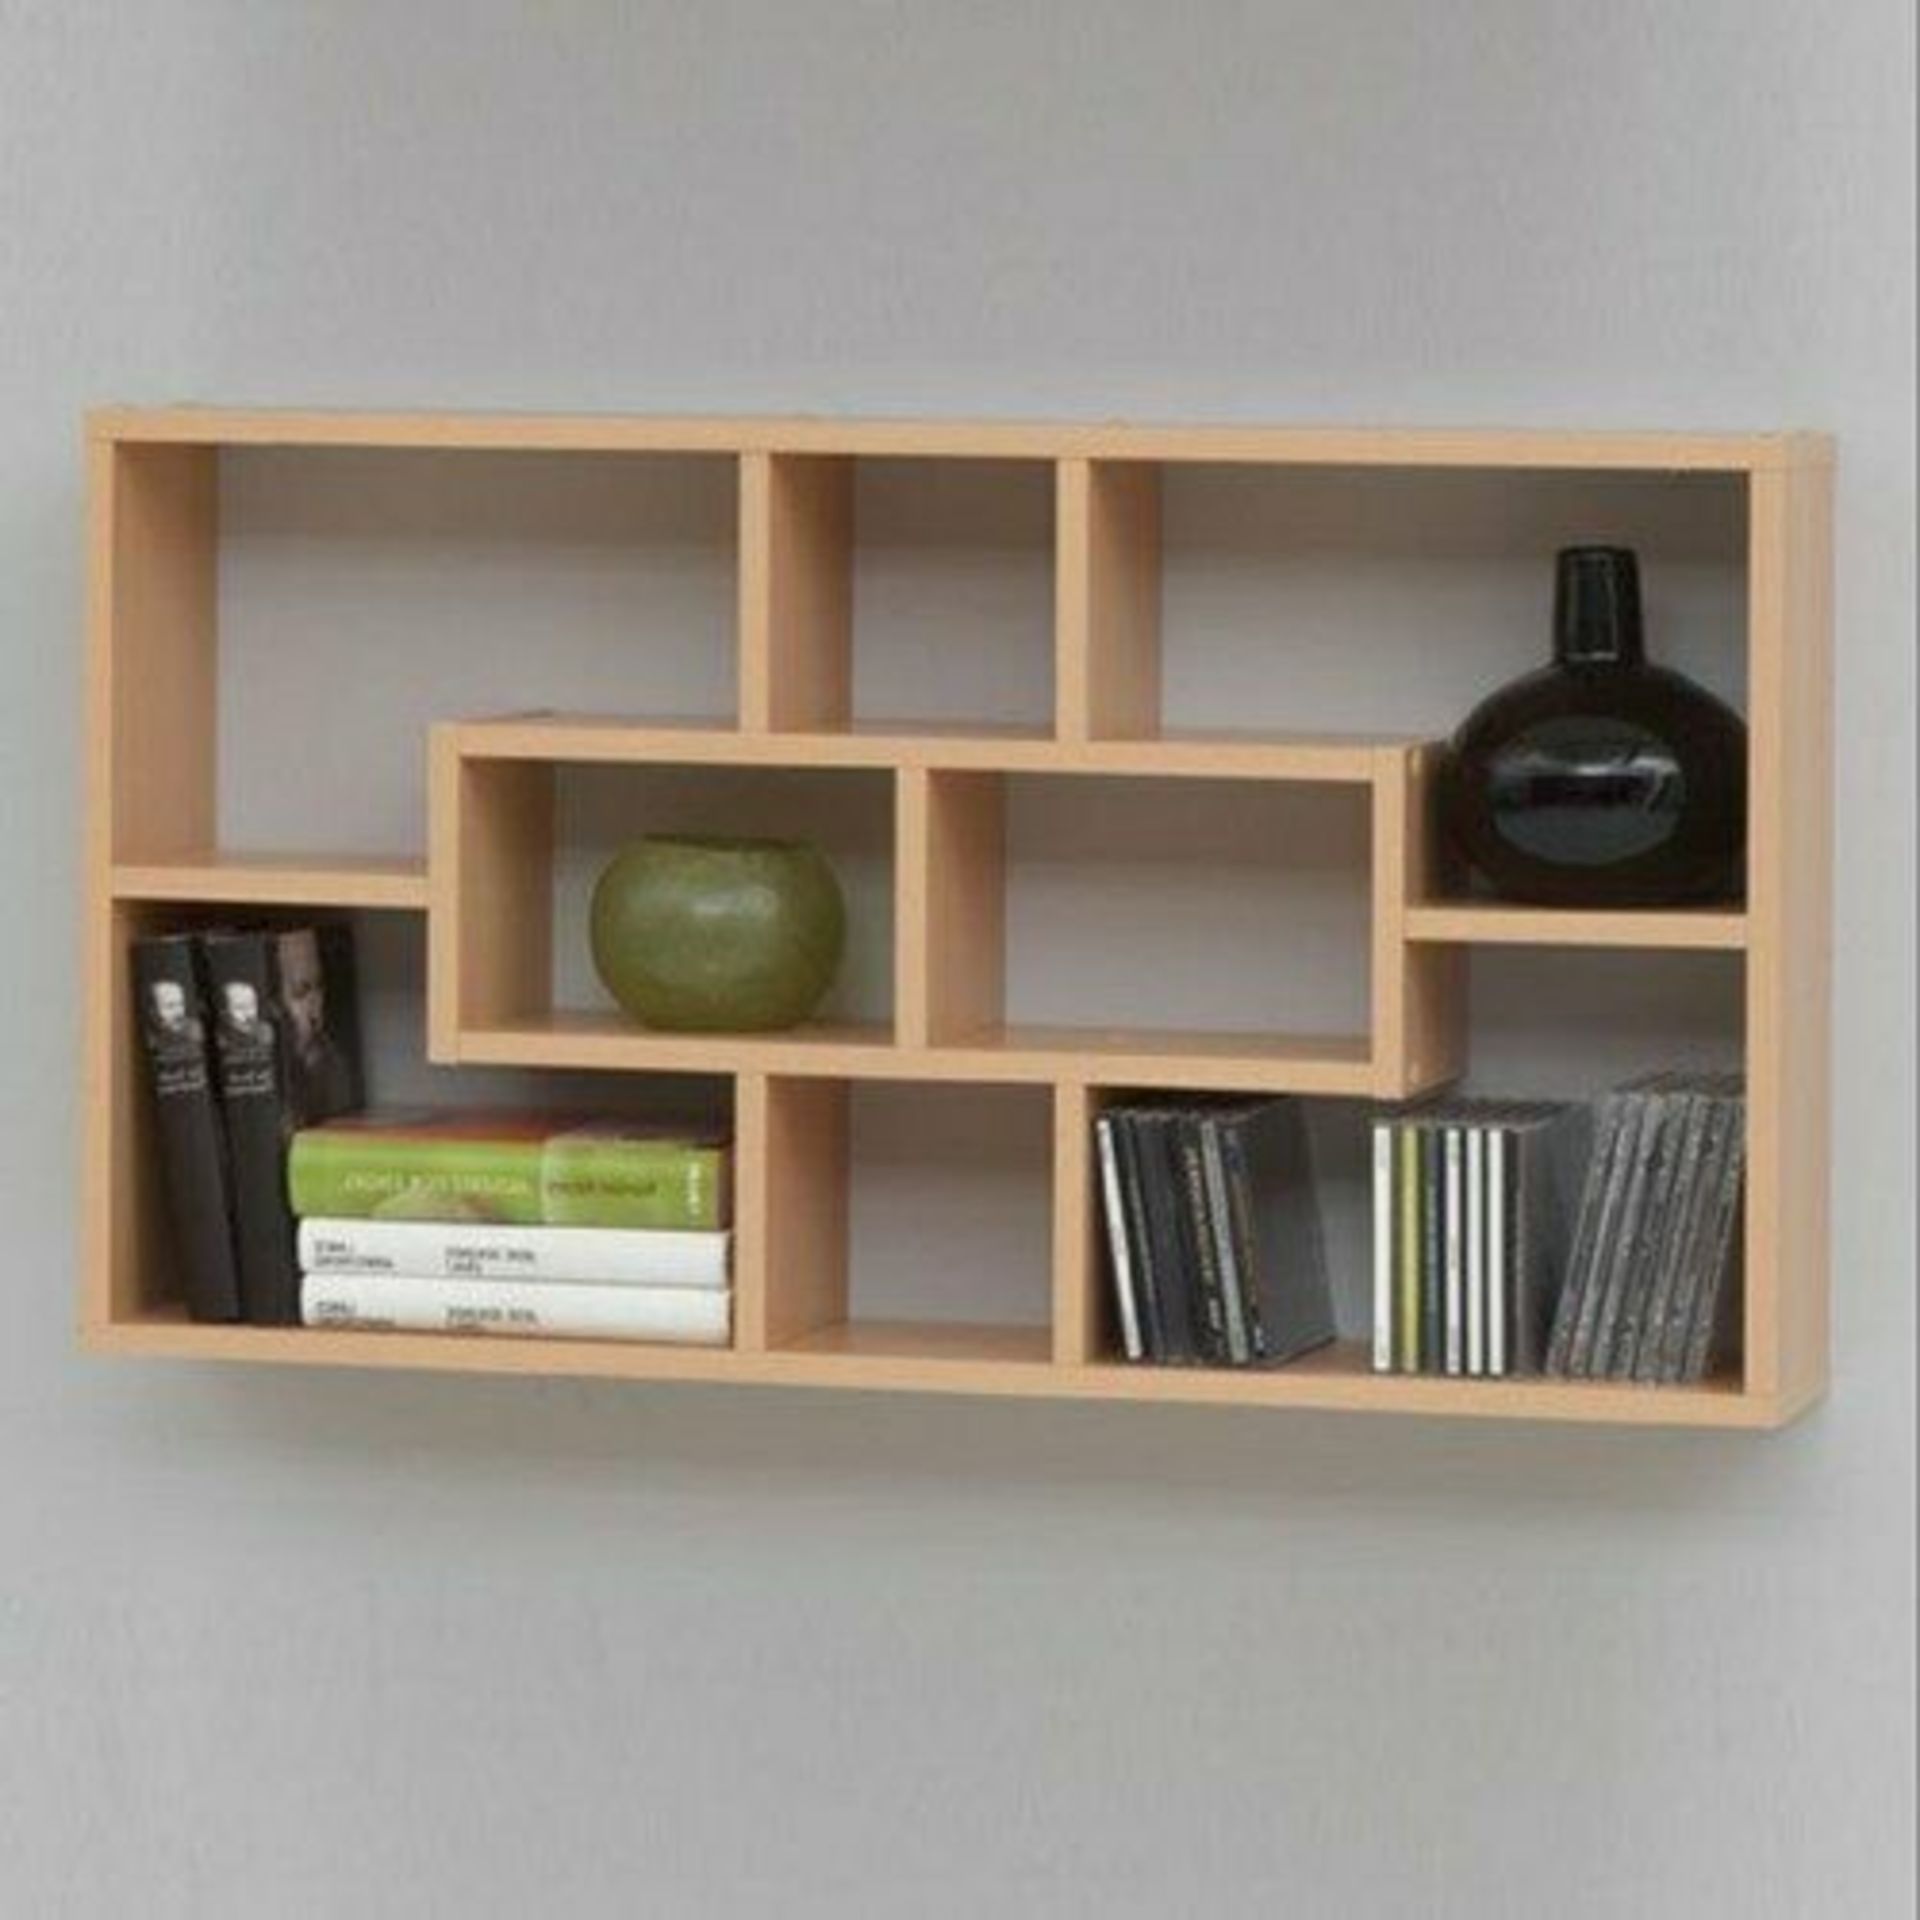 3 x Lasse Display Shelving Decorative Designer Wall Shelf OAK